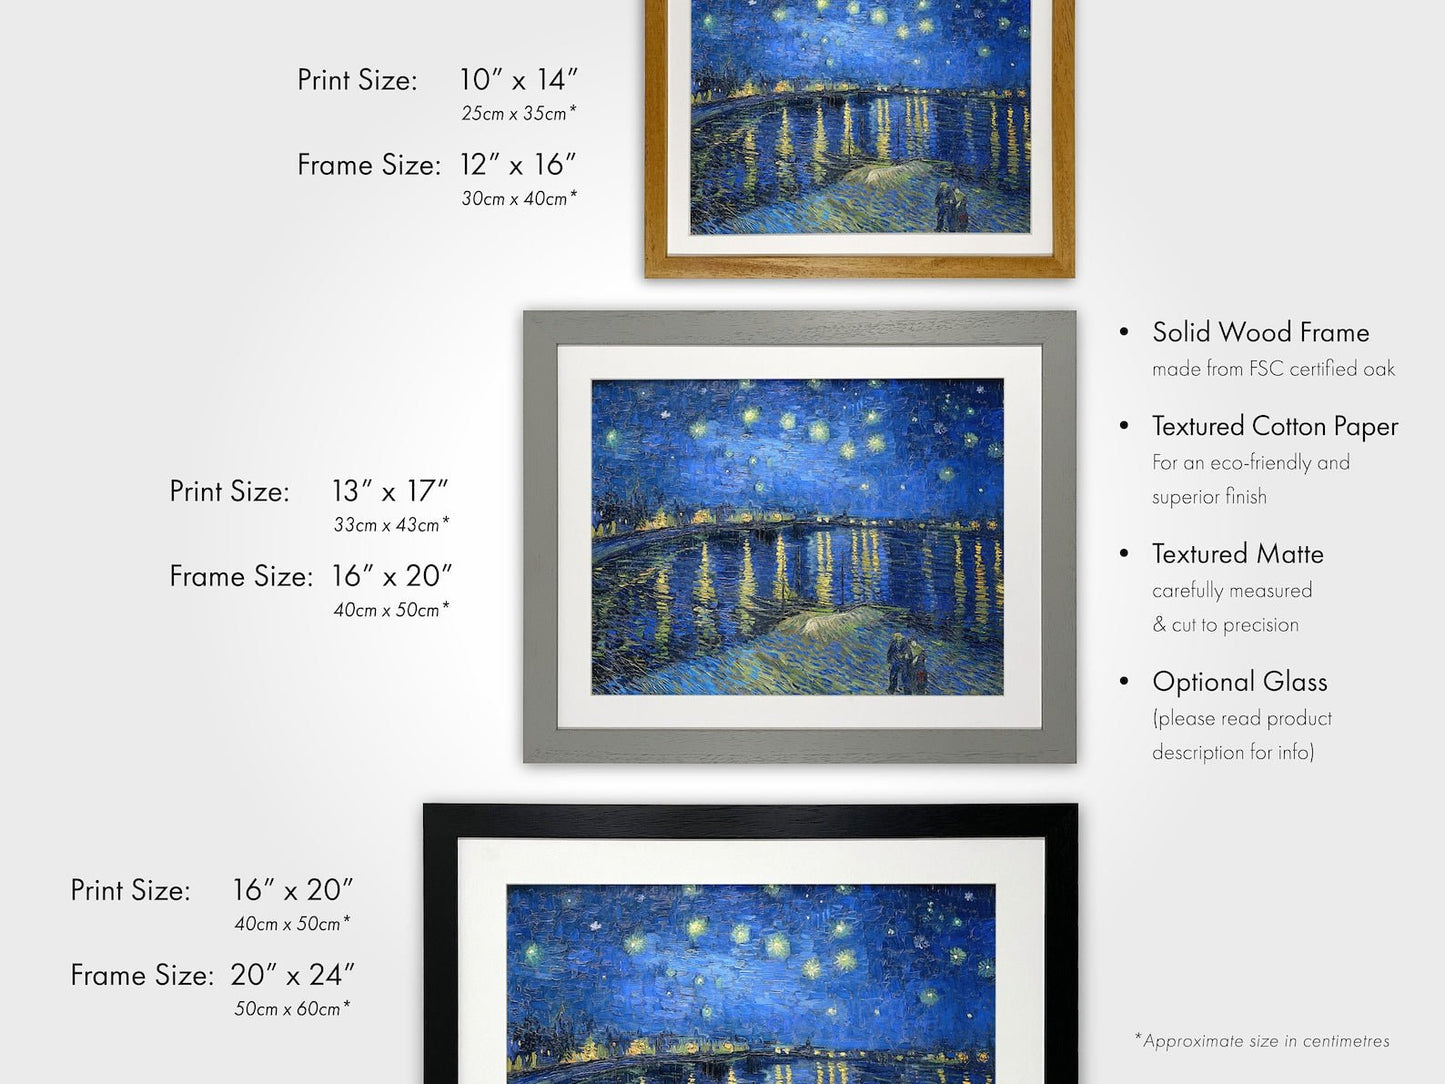 VINCENT VAN GOGH - Starry Night Over The Rhône - Pathos Studio - Art Prints